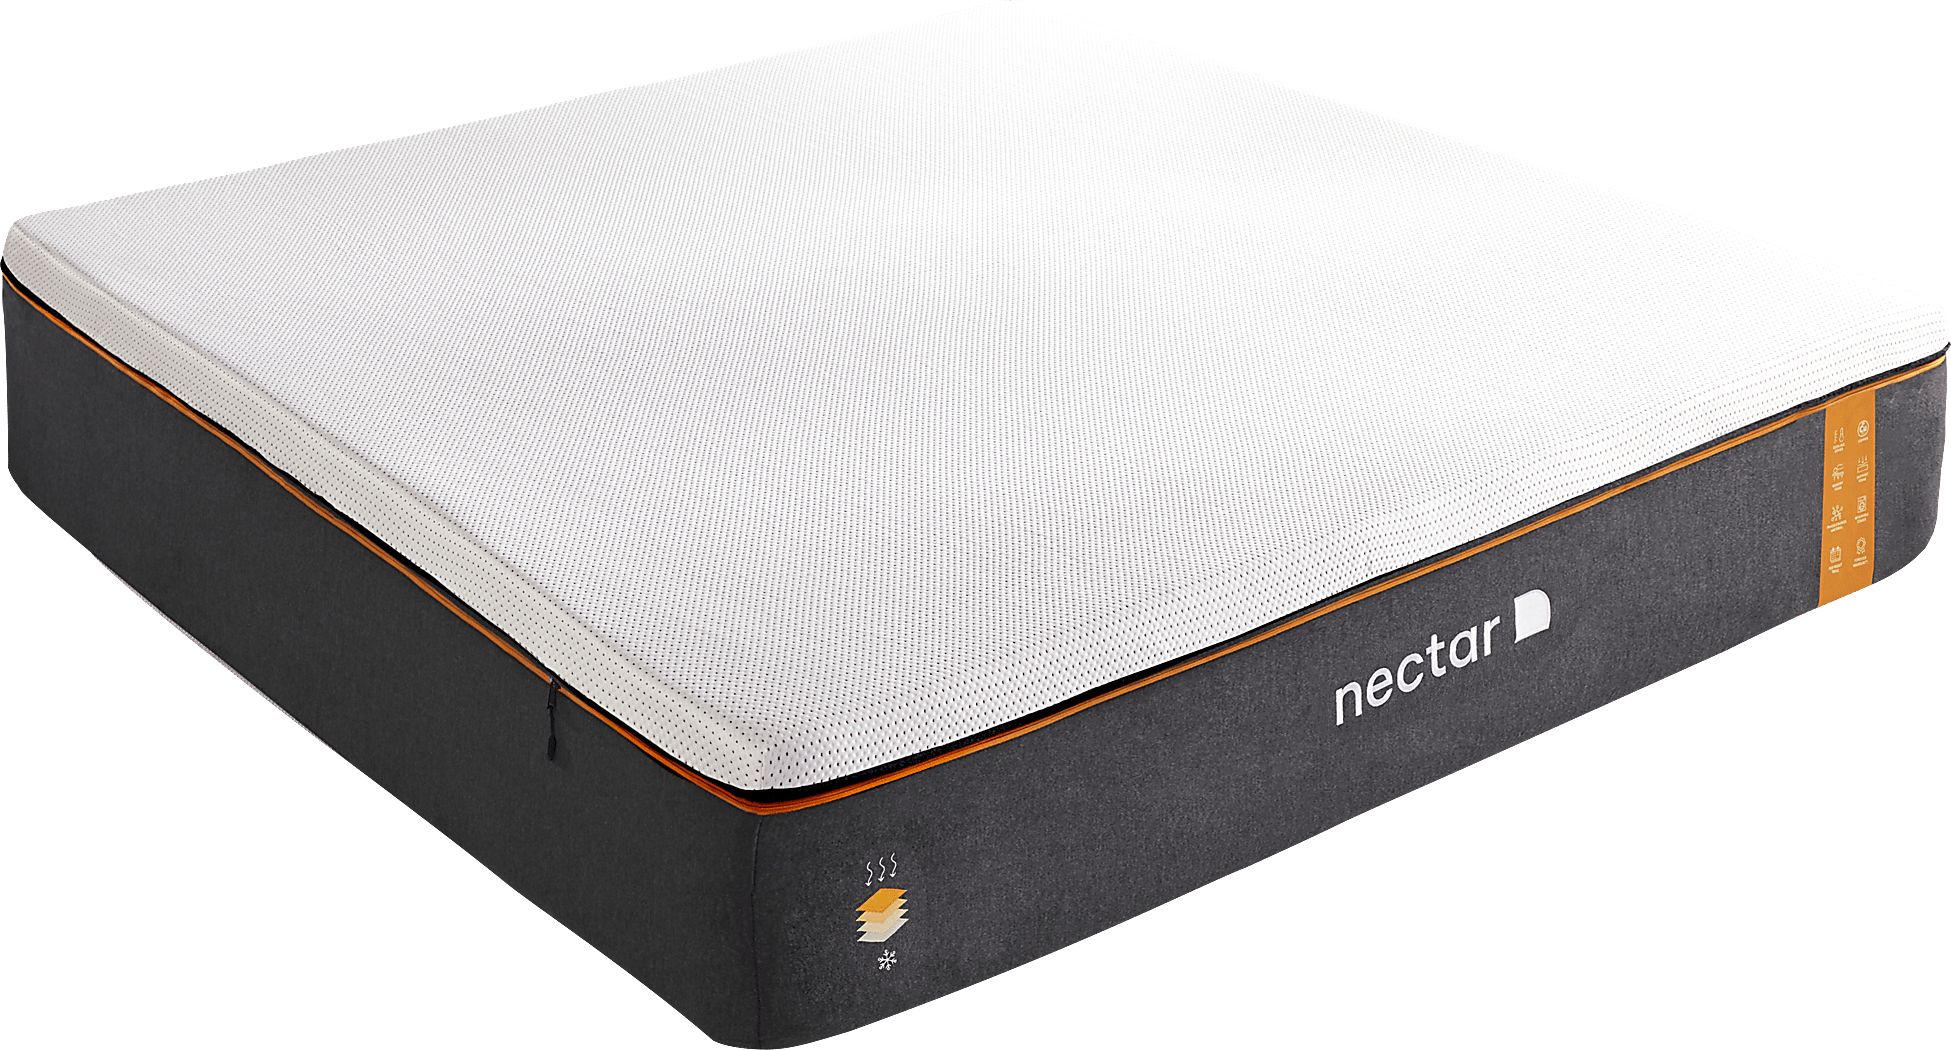 nectar king size mattress review